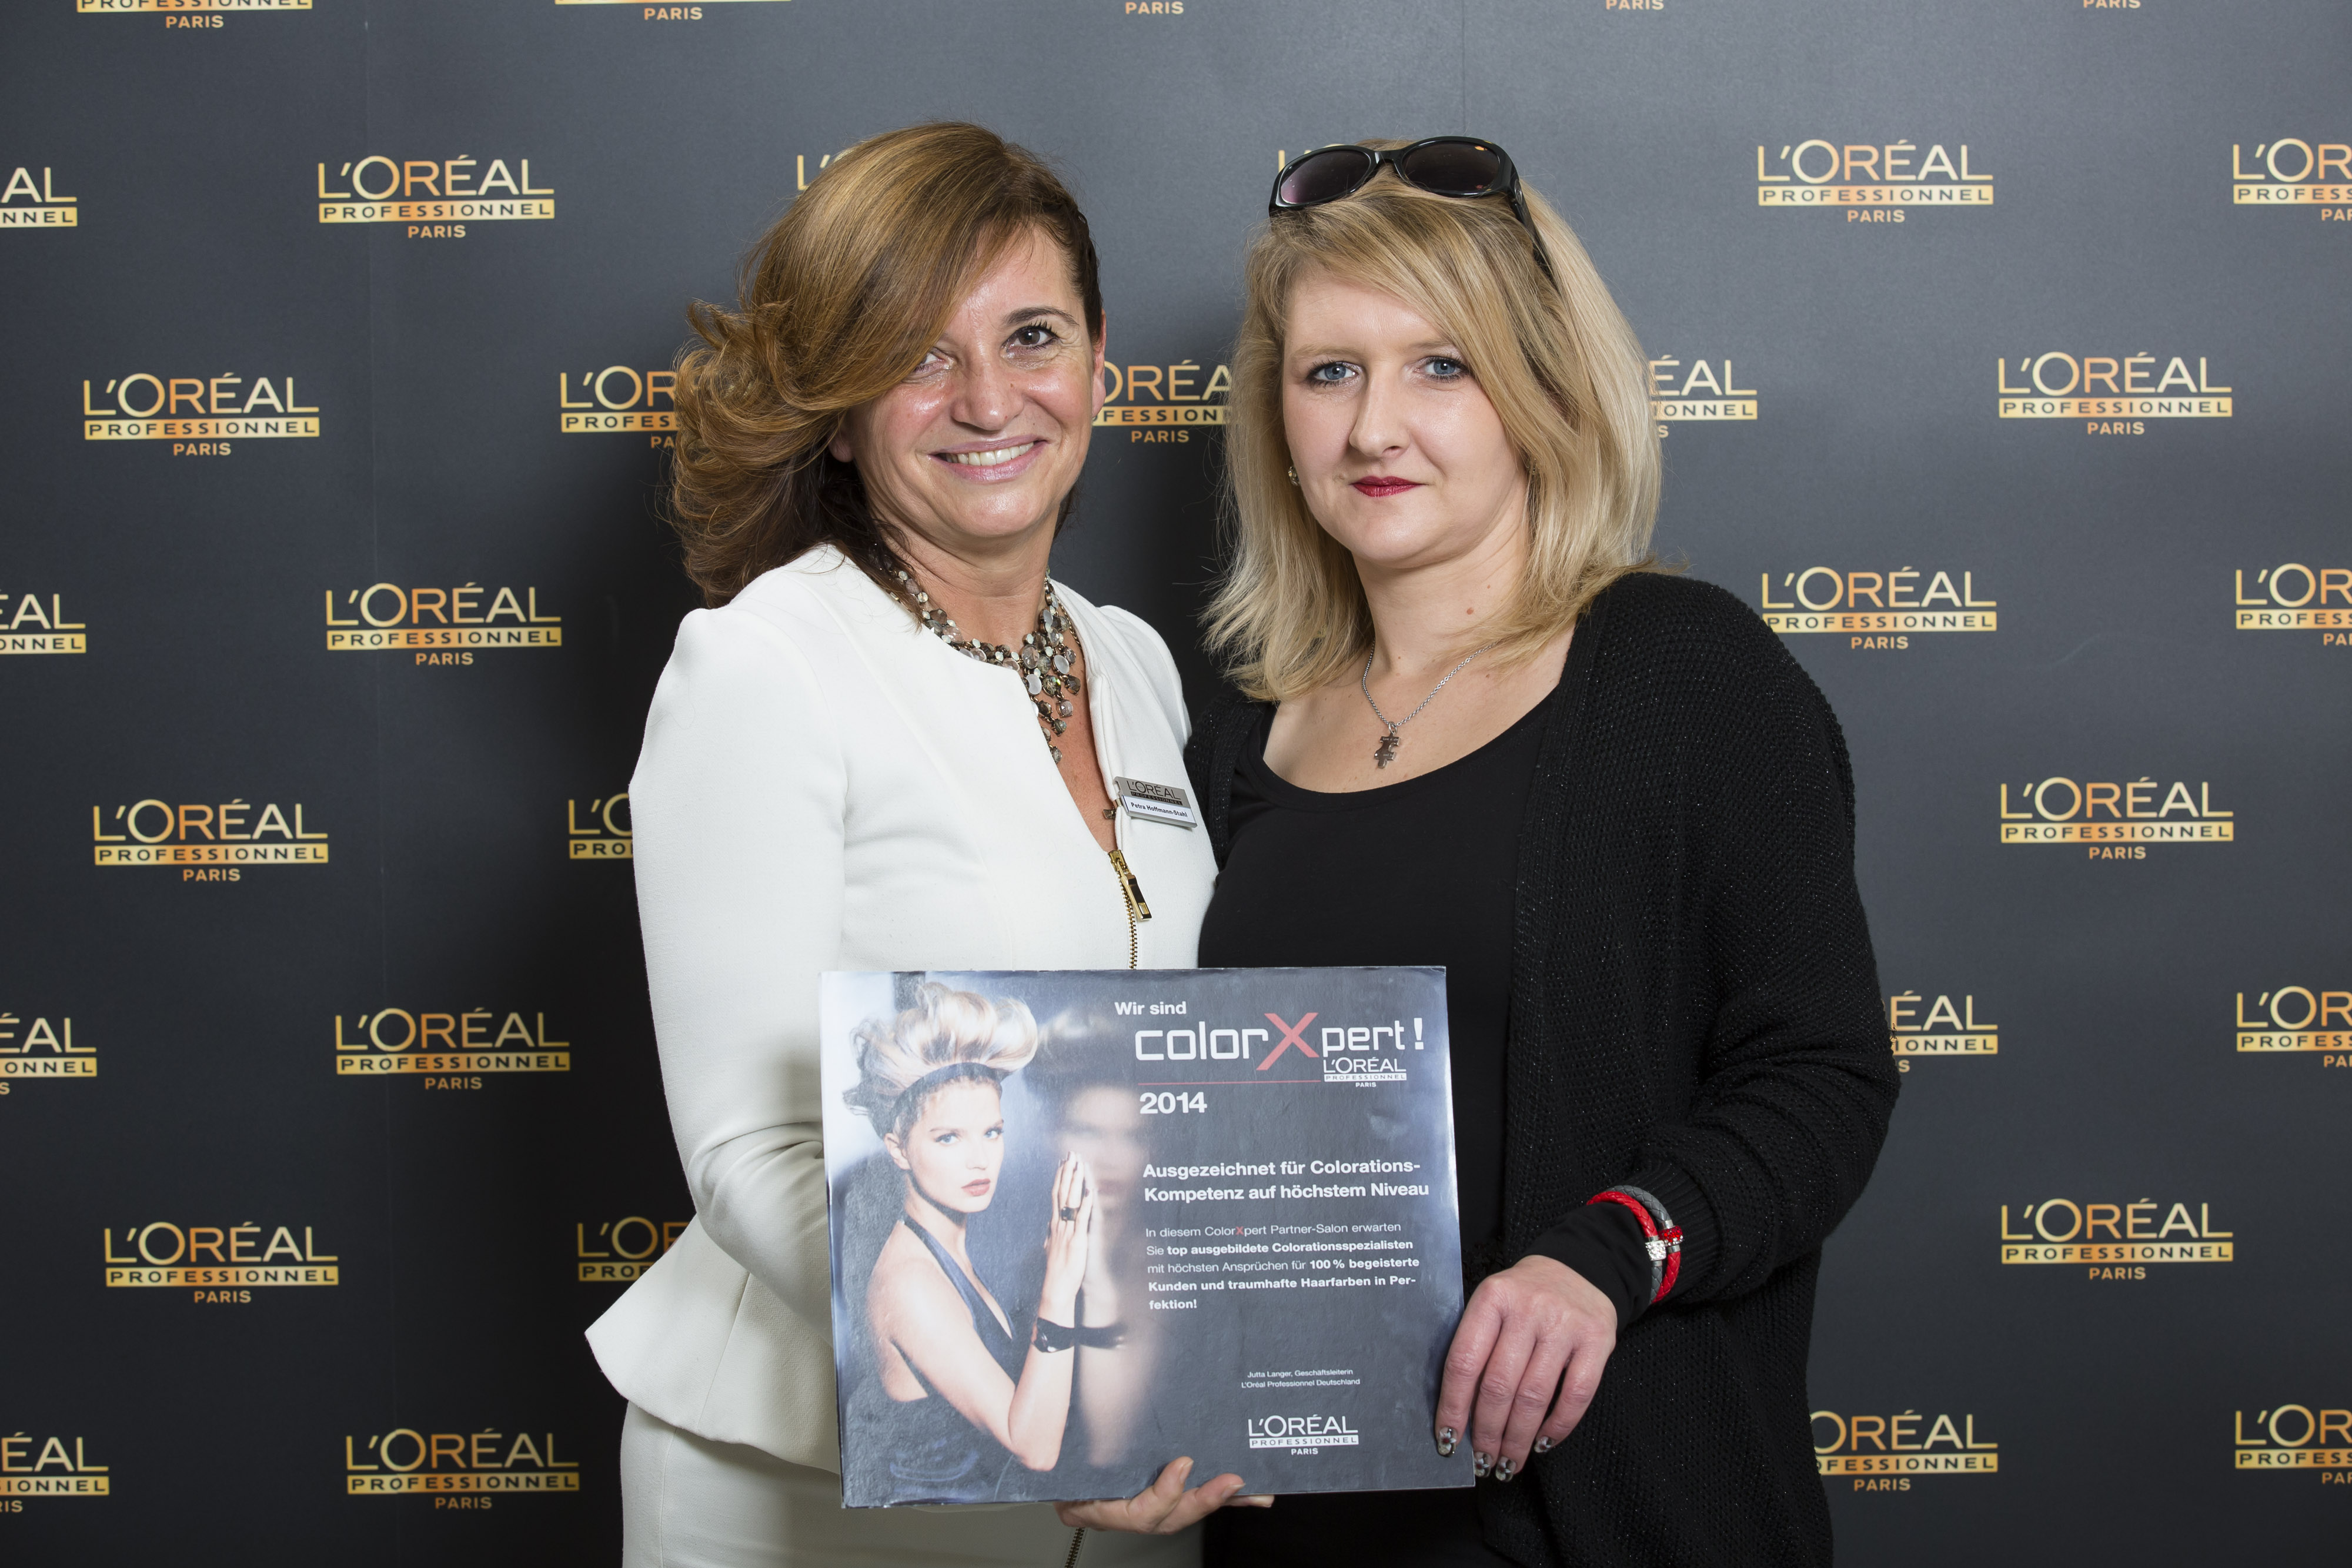 L'Oreal Color Expert 2014
Pressefotograf von L'Oreal

Petra Hoffmann-Stahl (li.)
Beatrix Schickert (re.)